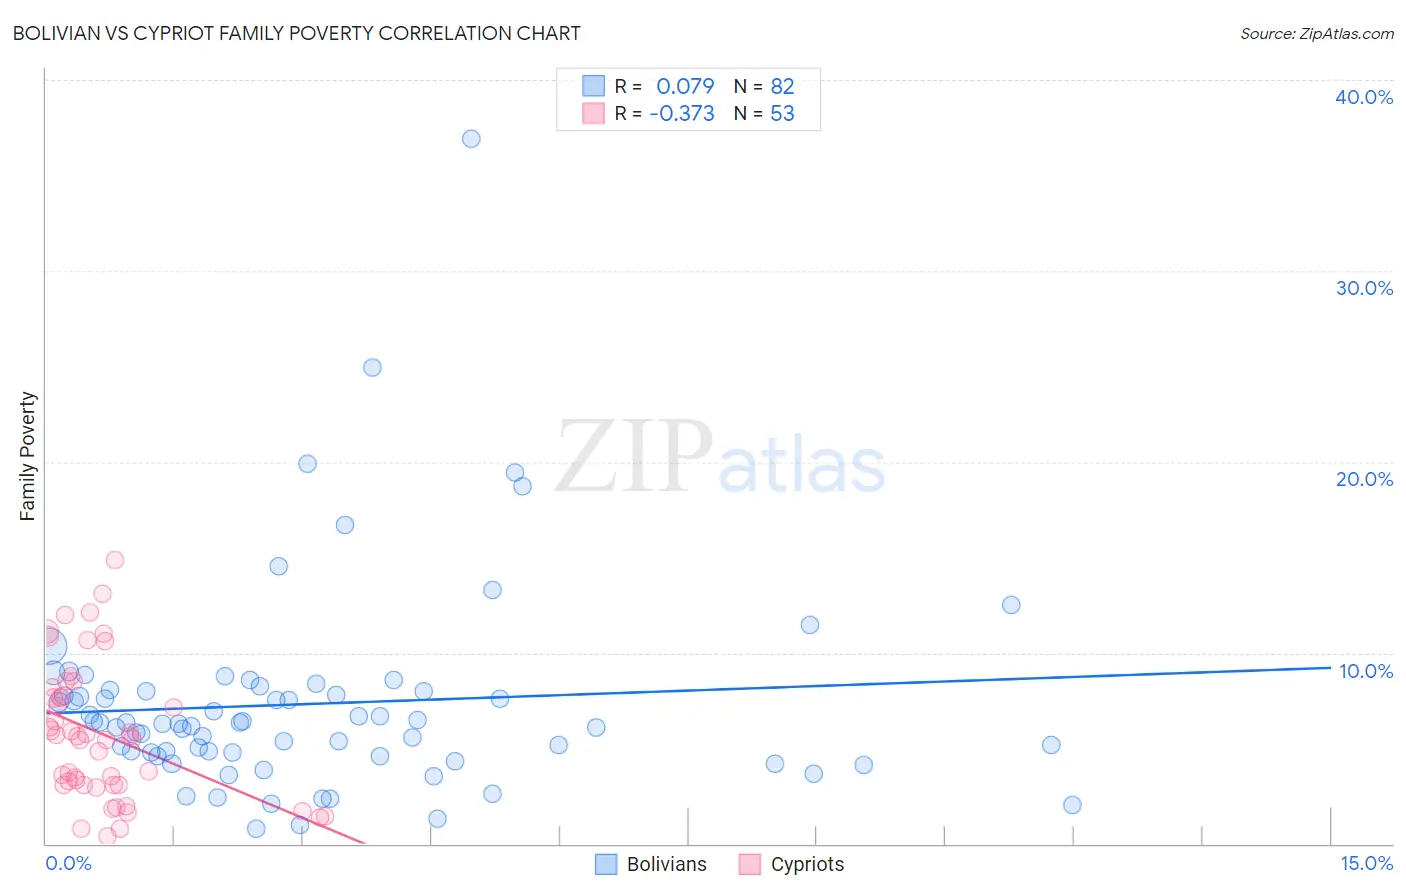 Bolivian vs Cypriot Family Poverty